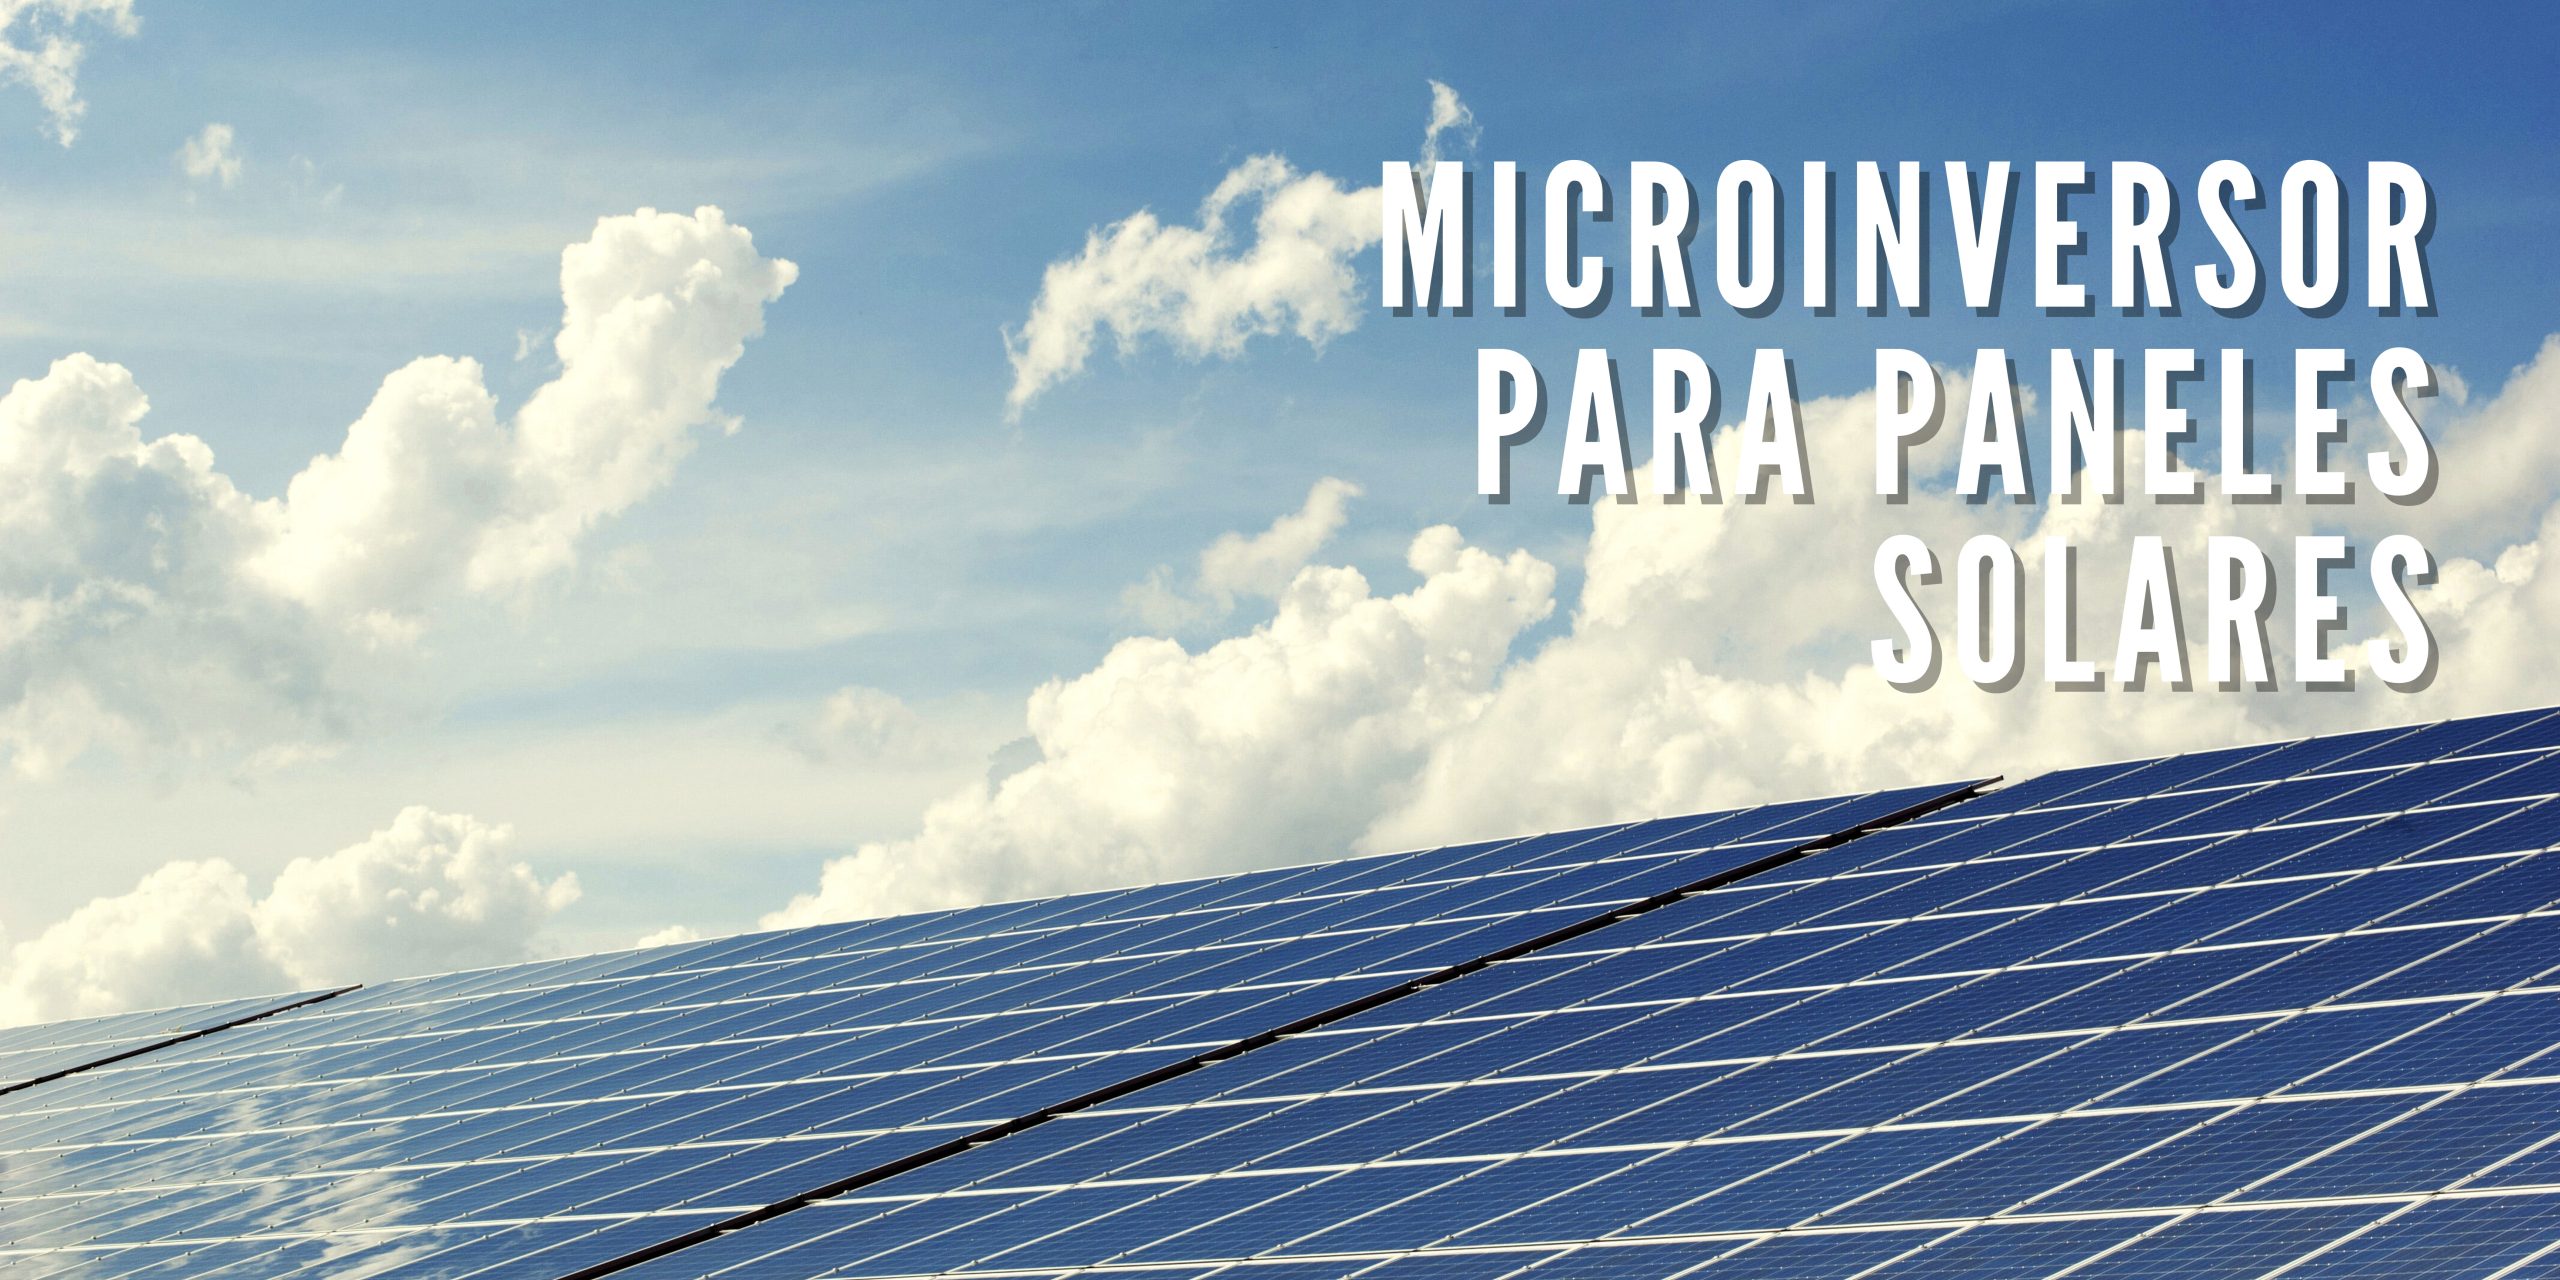 Microinversor para paneles solares